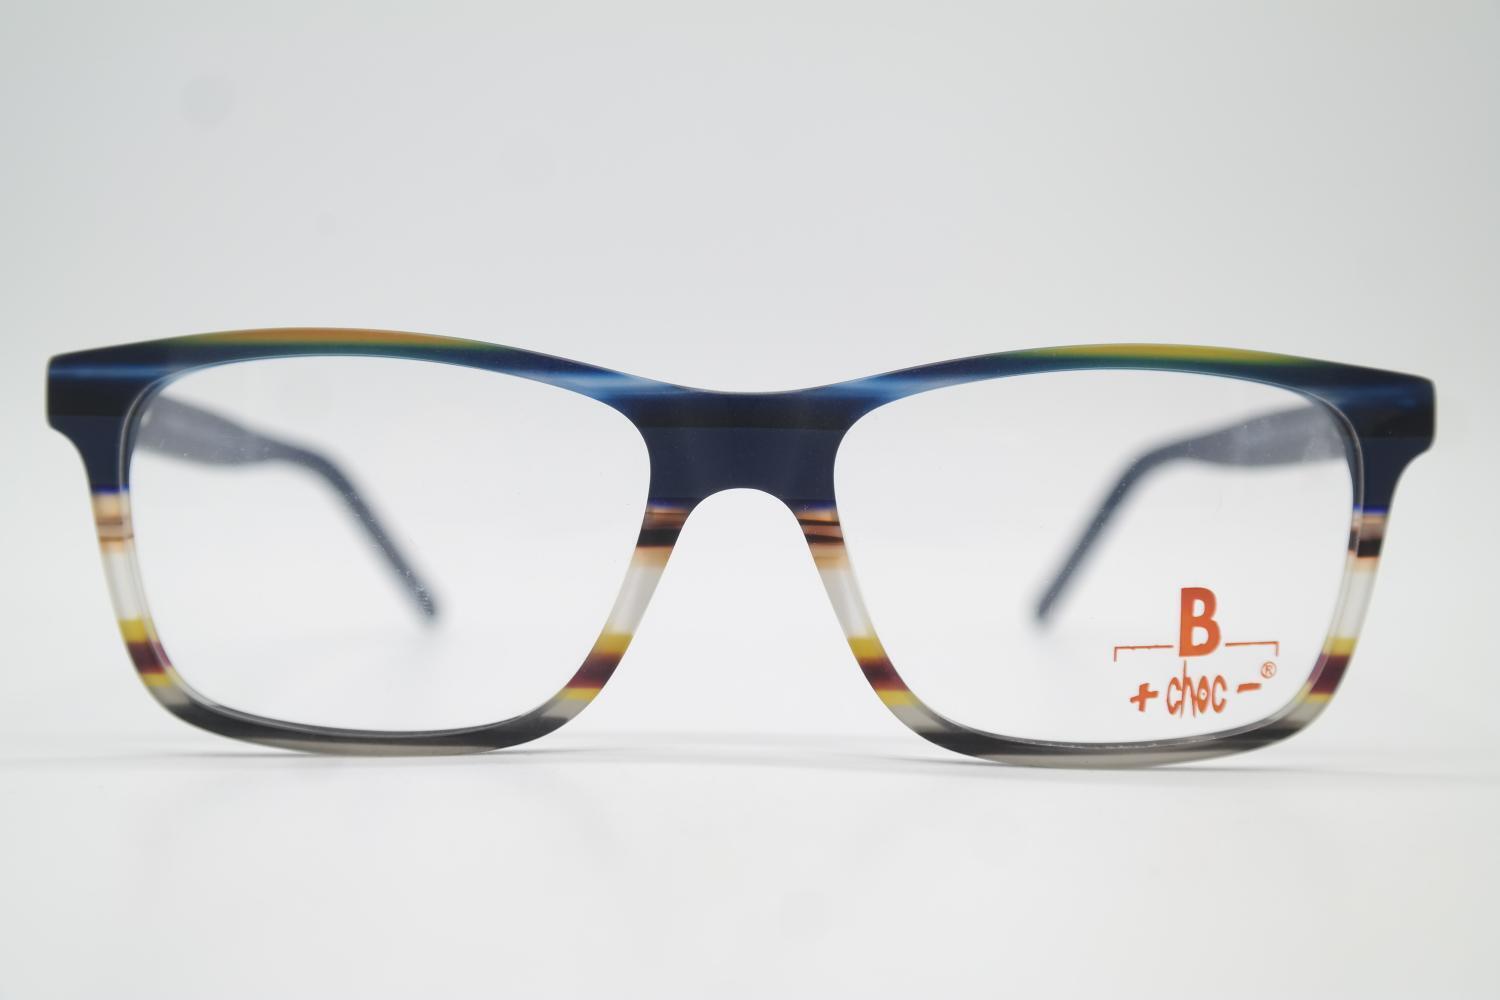 Glasses Brillenmann CHOC C635 Multicoloured Blue Oval Frames Eyeglasses New